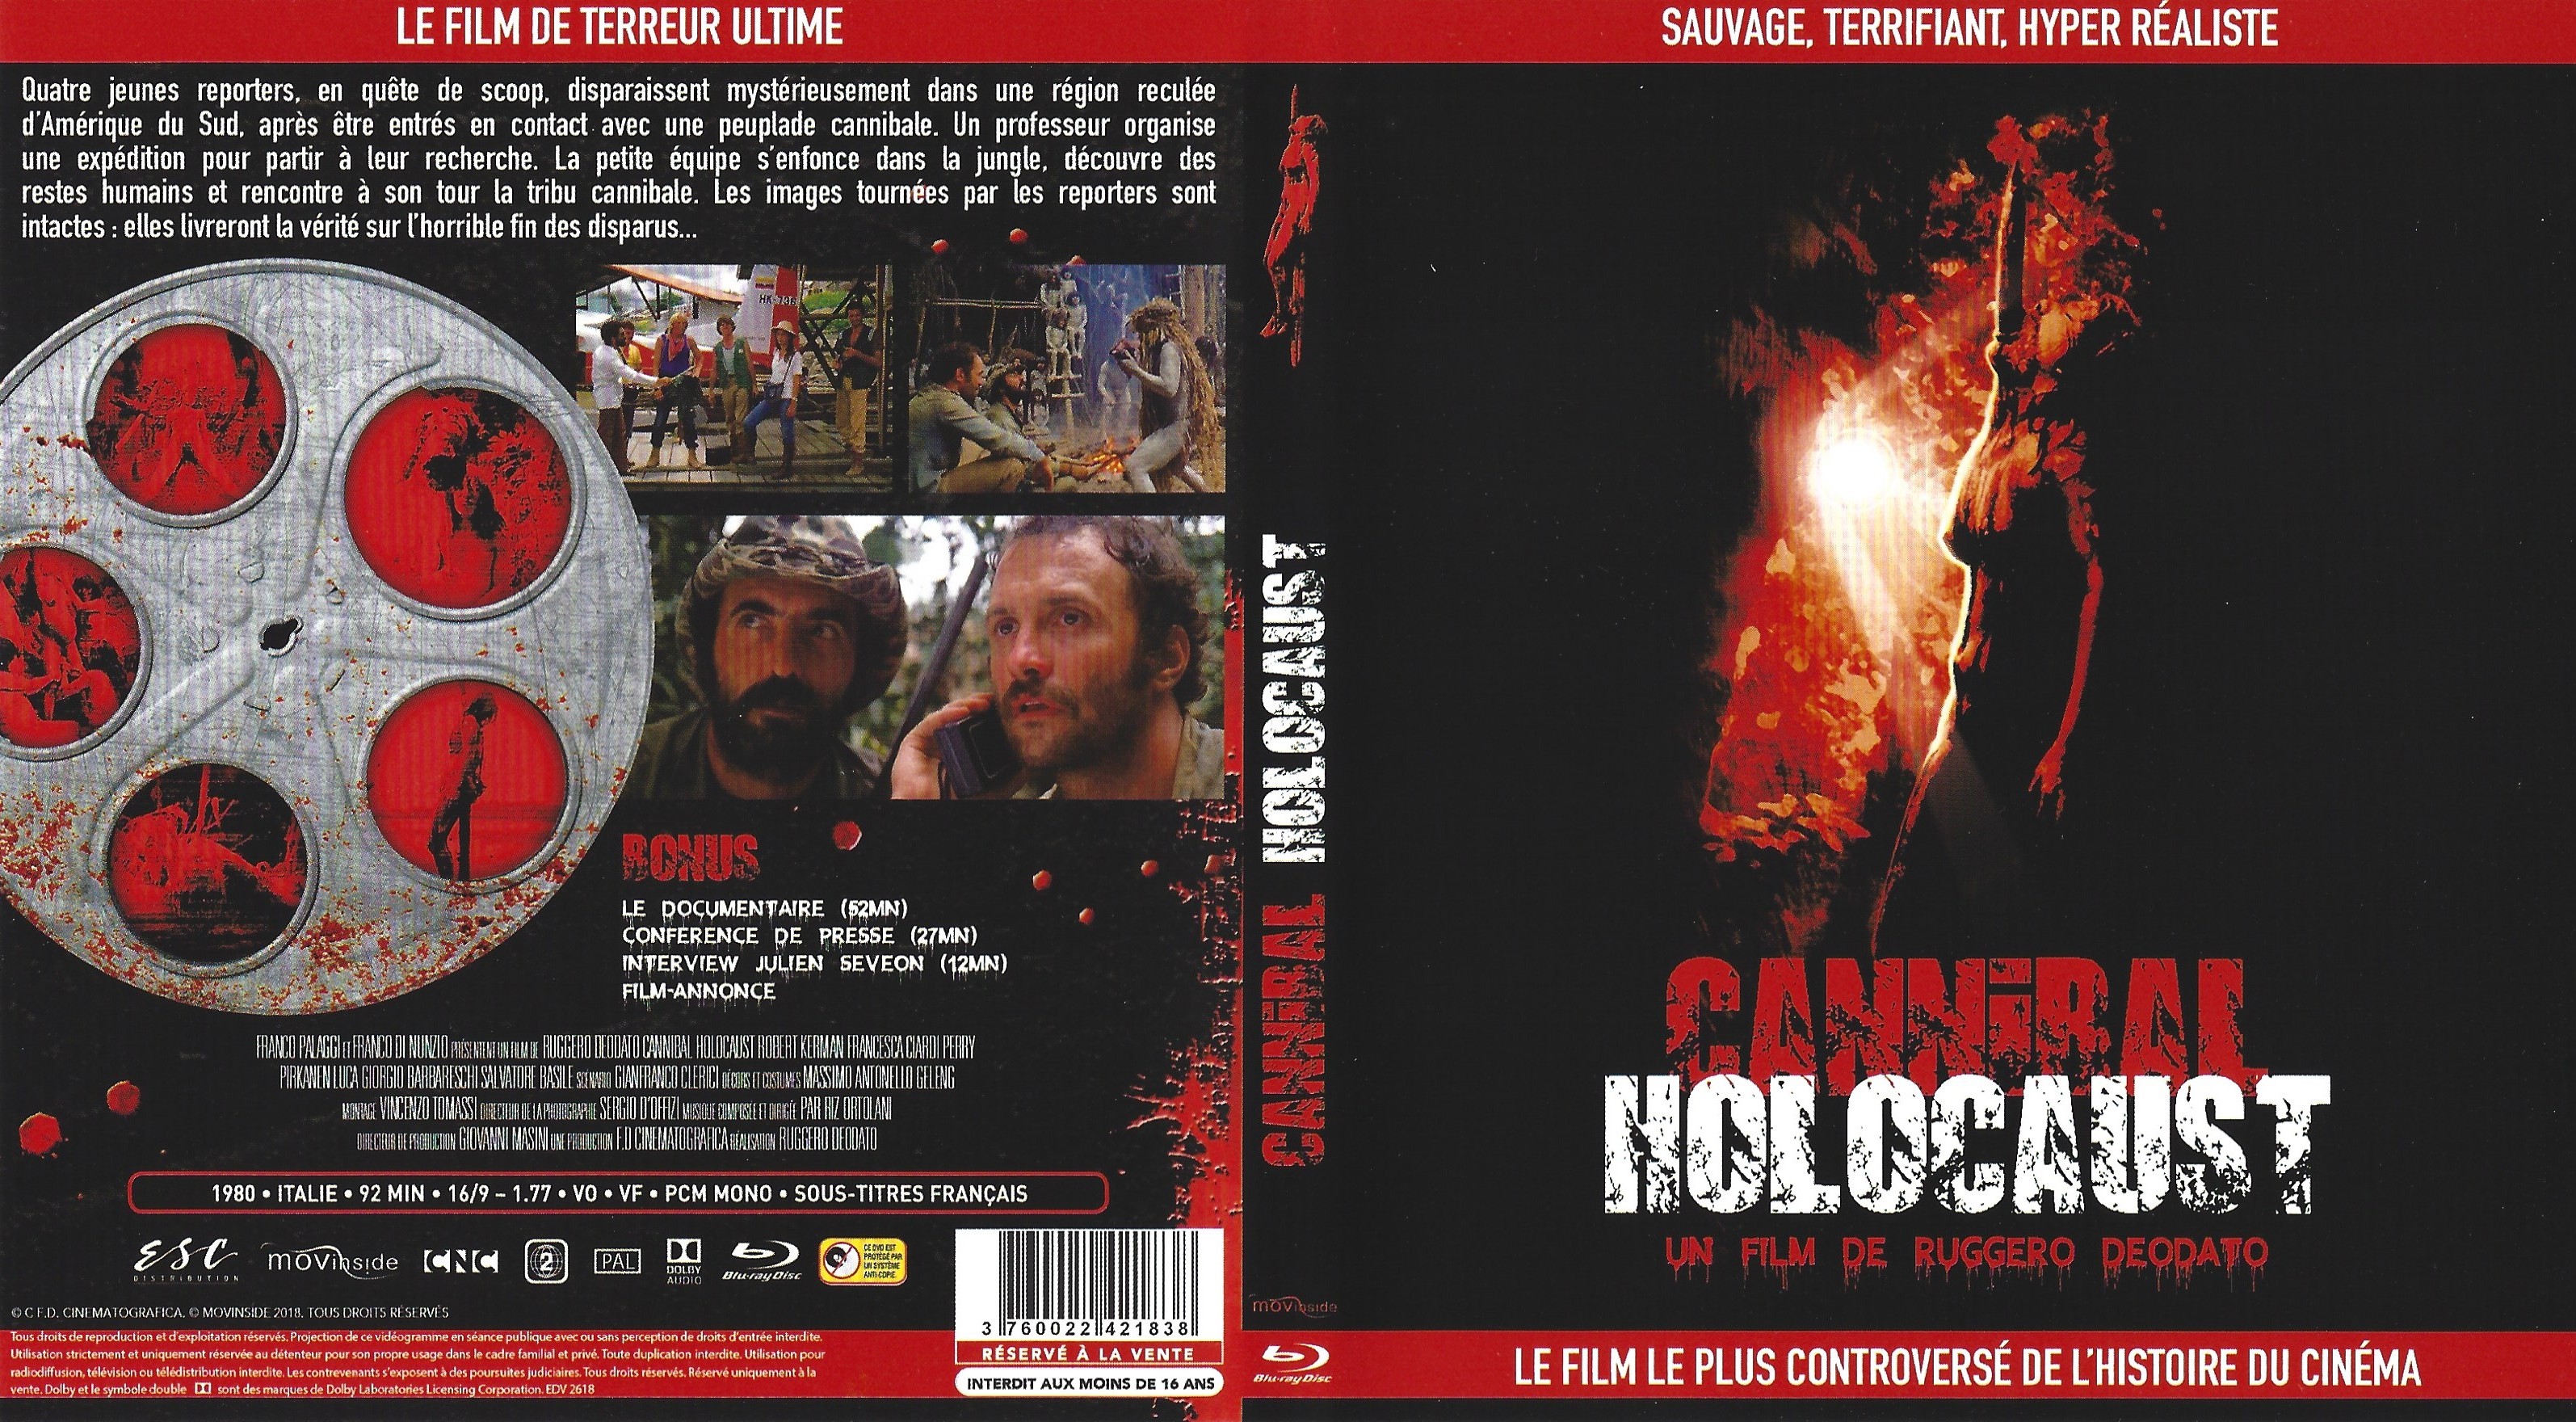 Jaquette DVD Cannibal Holocaust (BLU-RAY) v2